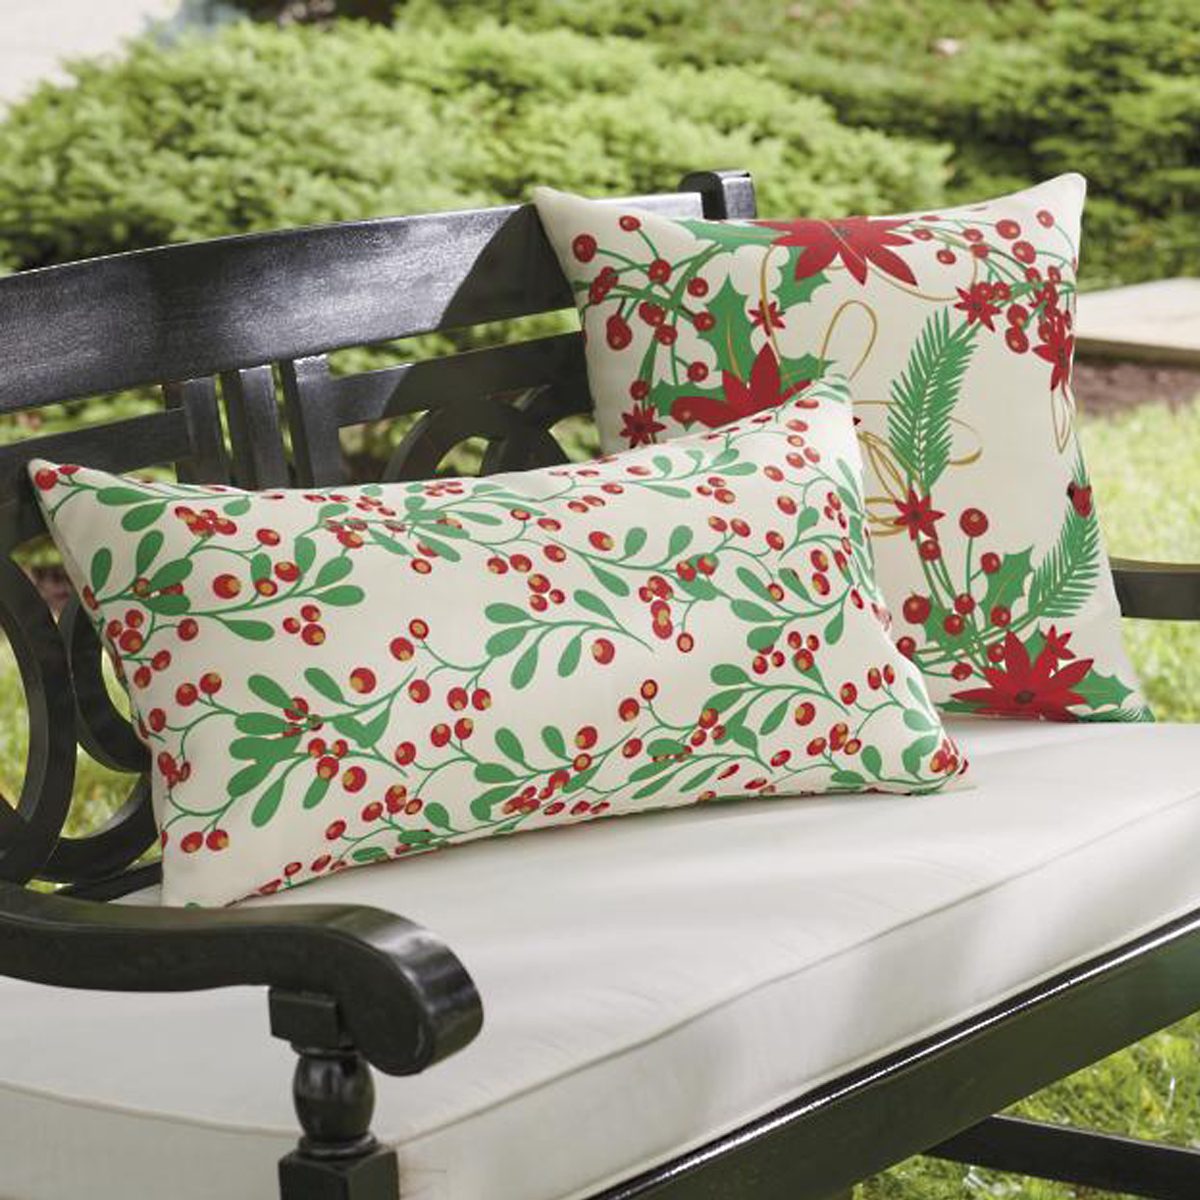 Joyful Poinsettia & Holly Berry Pillows Ecomm Grandinroad.com